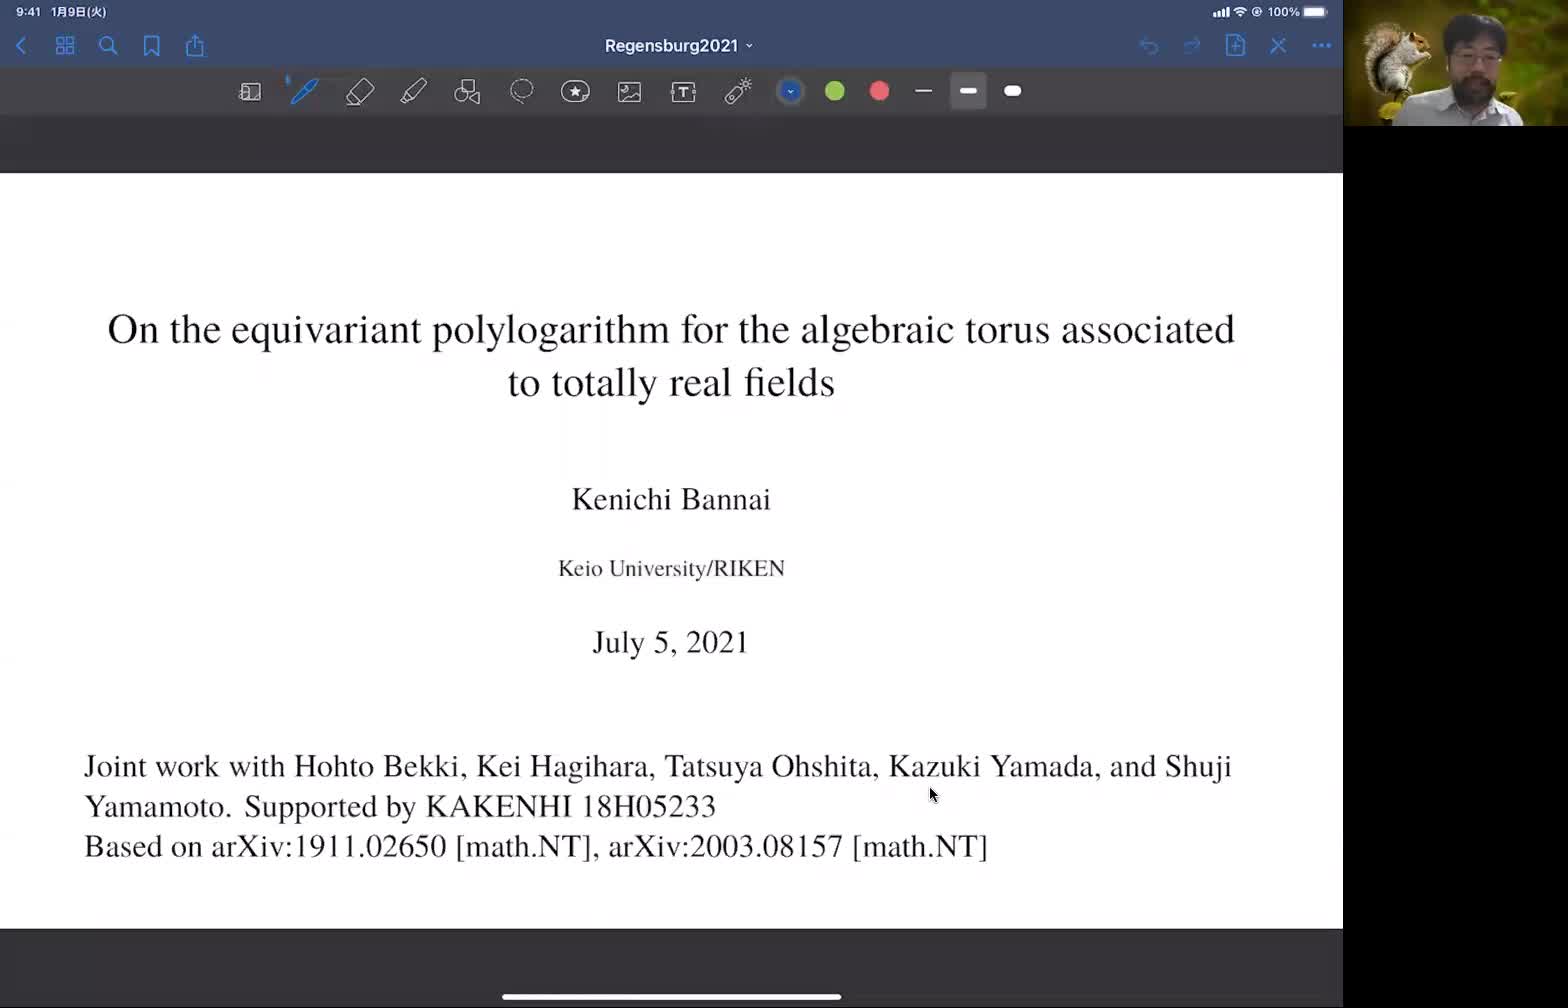 Kenichi Bannai: On the equivariant polylogarithm for the algebraic torus associated to totally real fields